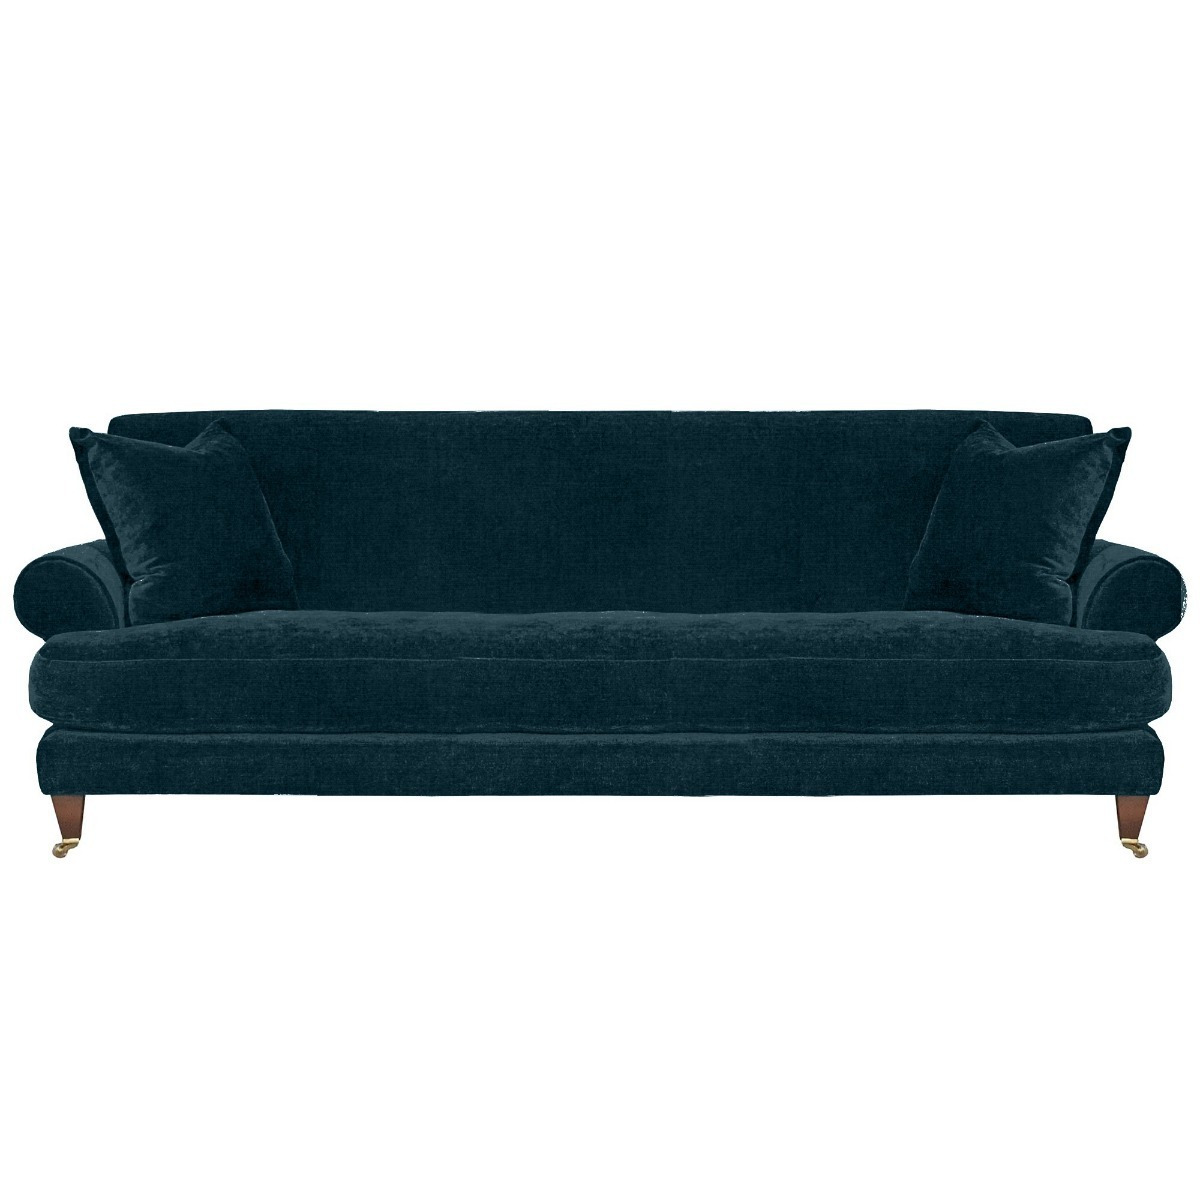 Fairlawn 4 Seater Sofa, Teal Fabric - Barker & Stonehouse - image 1